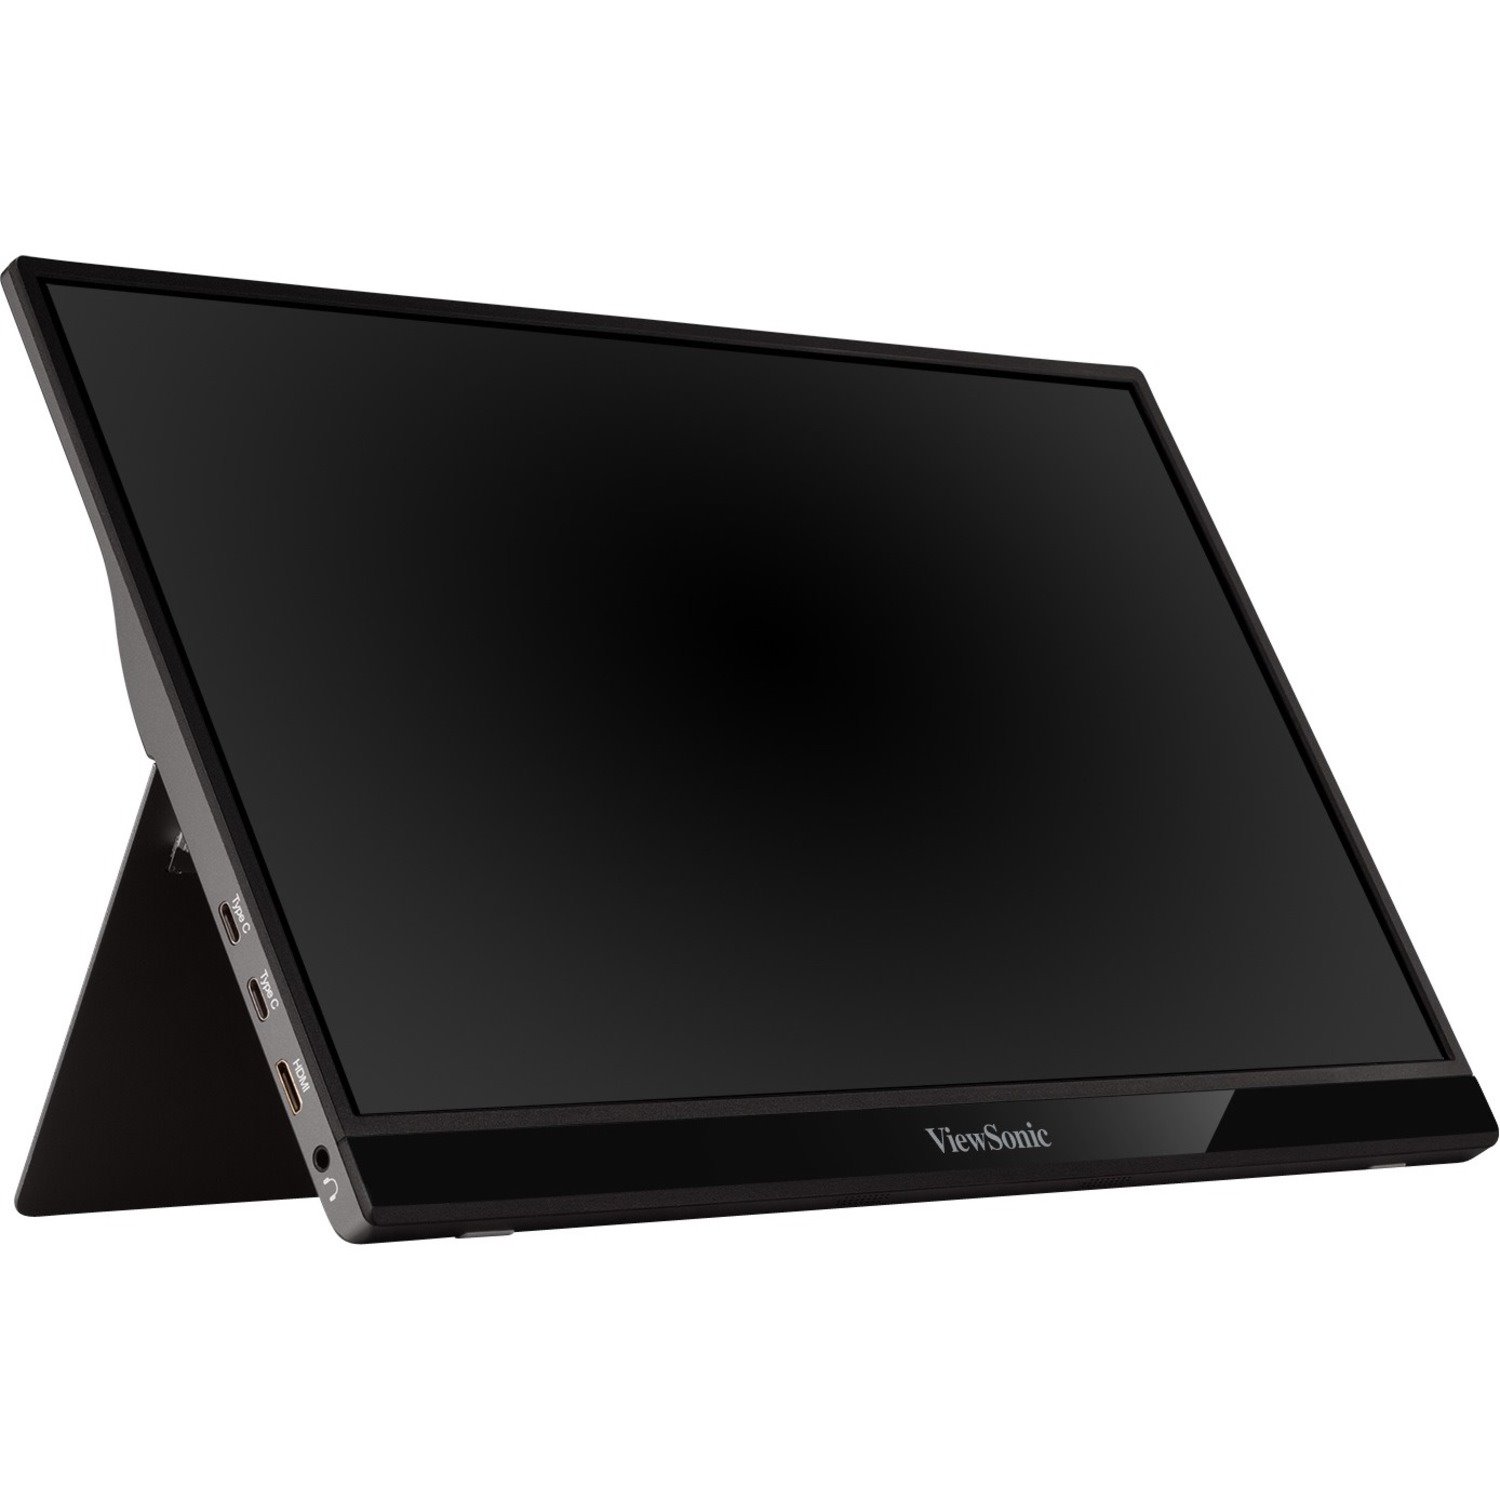 ViewSonic VG1655 39.6 cm (15.6") Full HD LED LCD Monitor - 16:9 - Silver